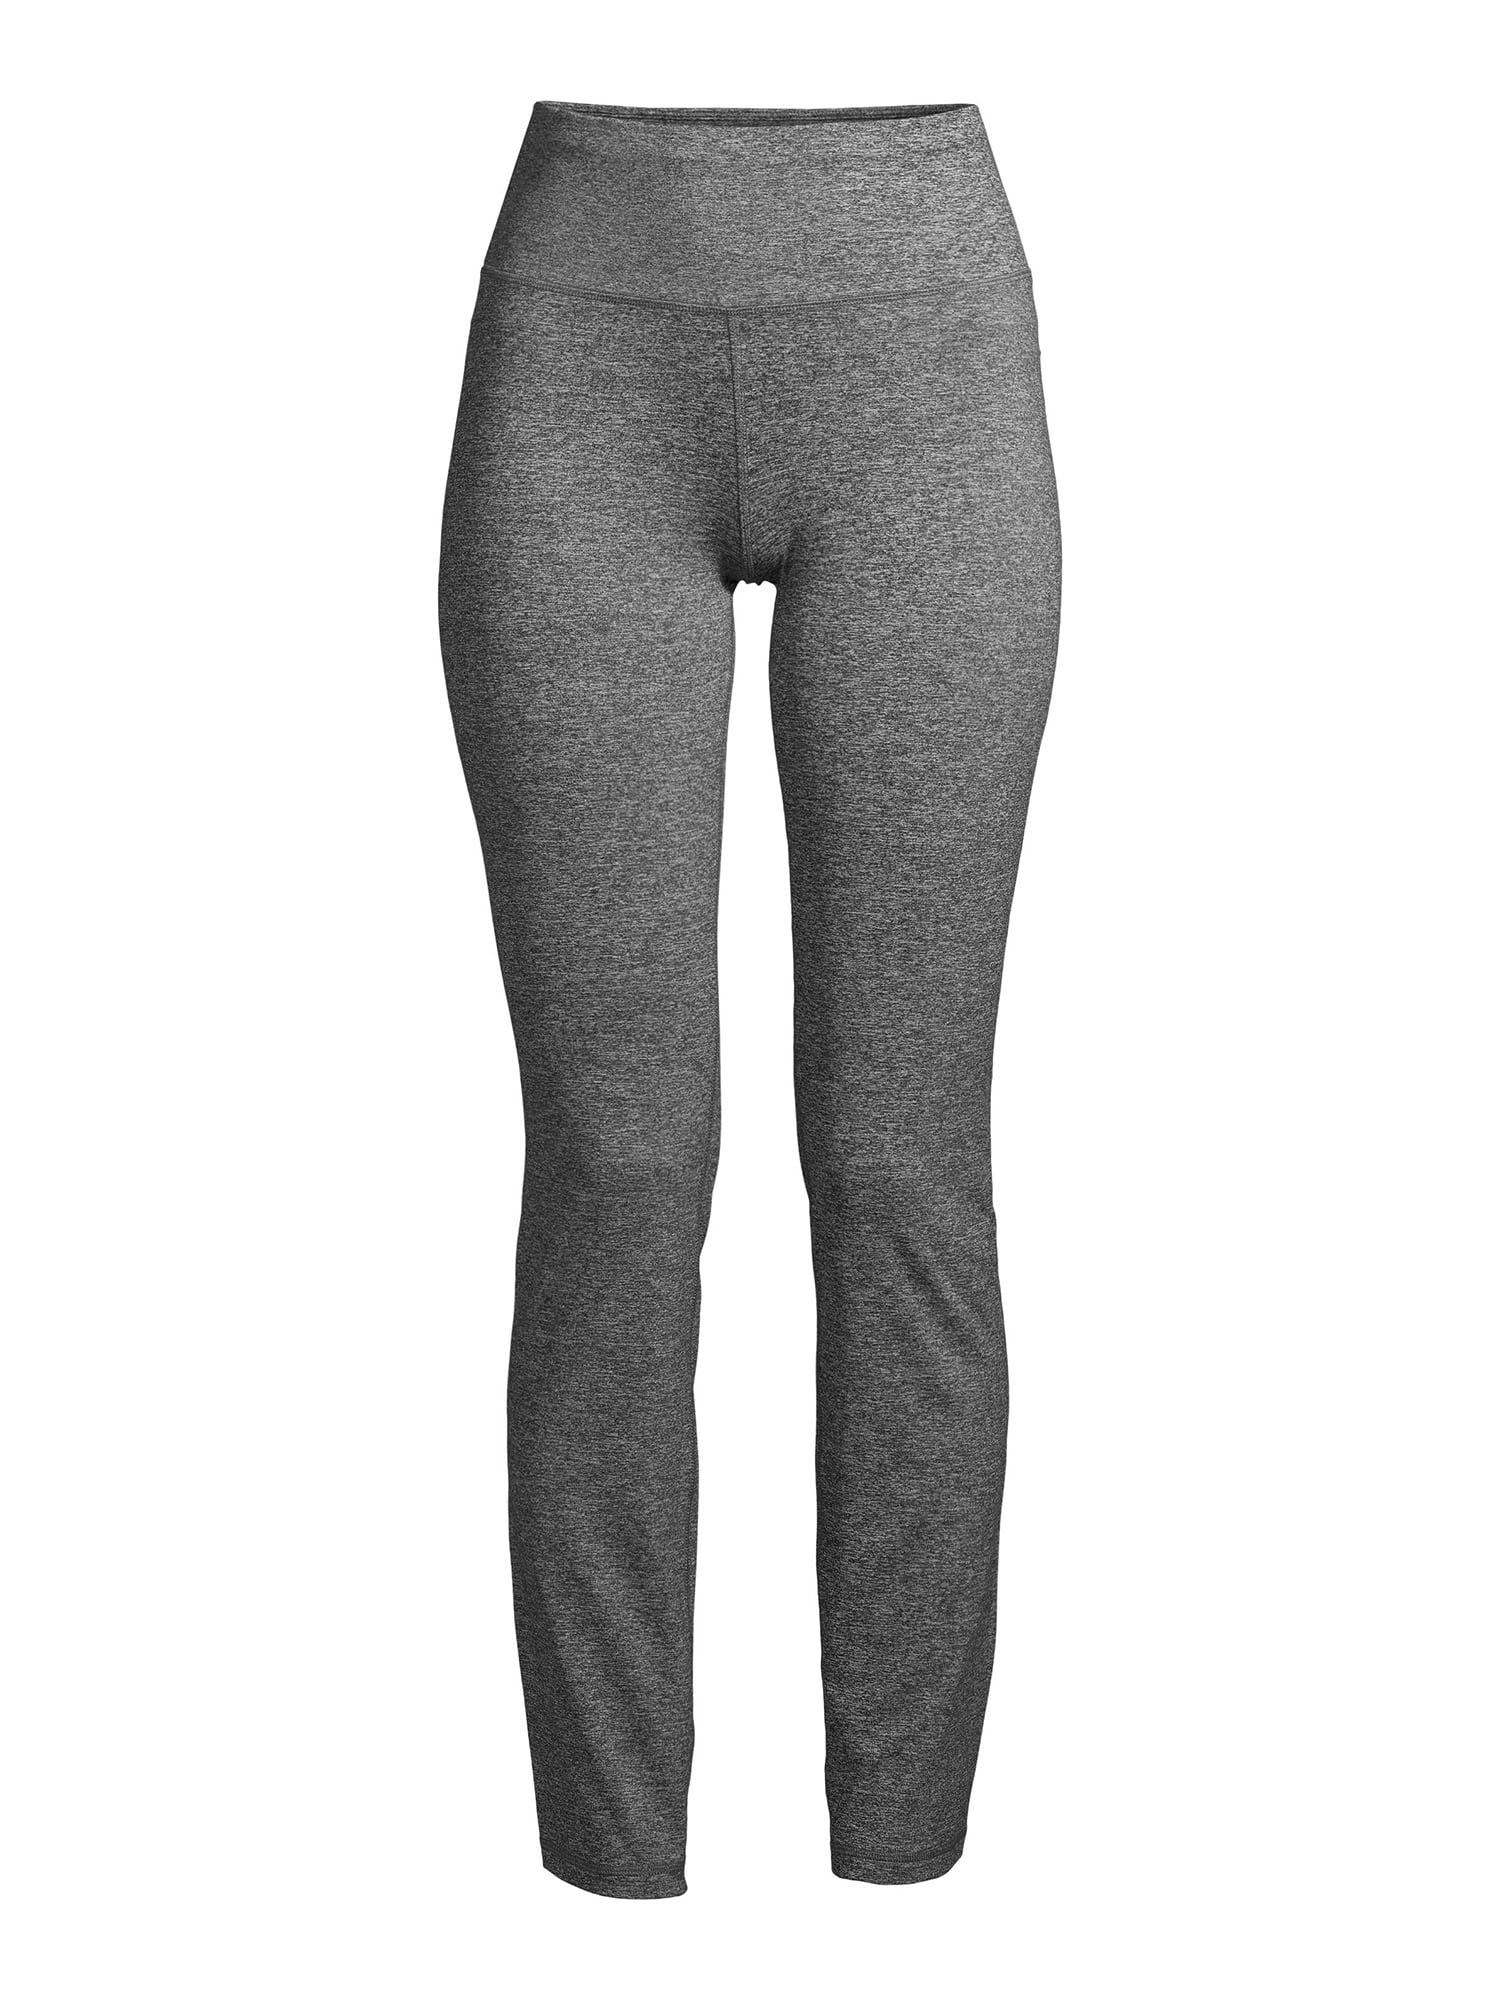 Avia Activewear Women's Skinny Pants (Medium 8/10, Black) : :  Fashion